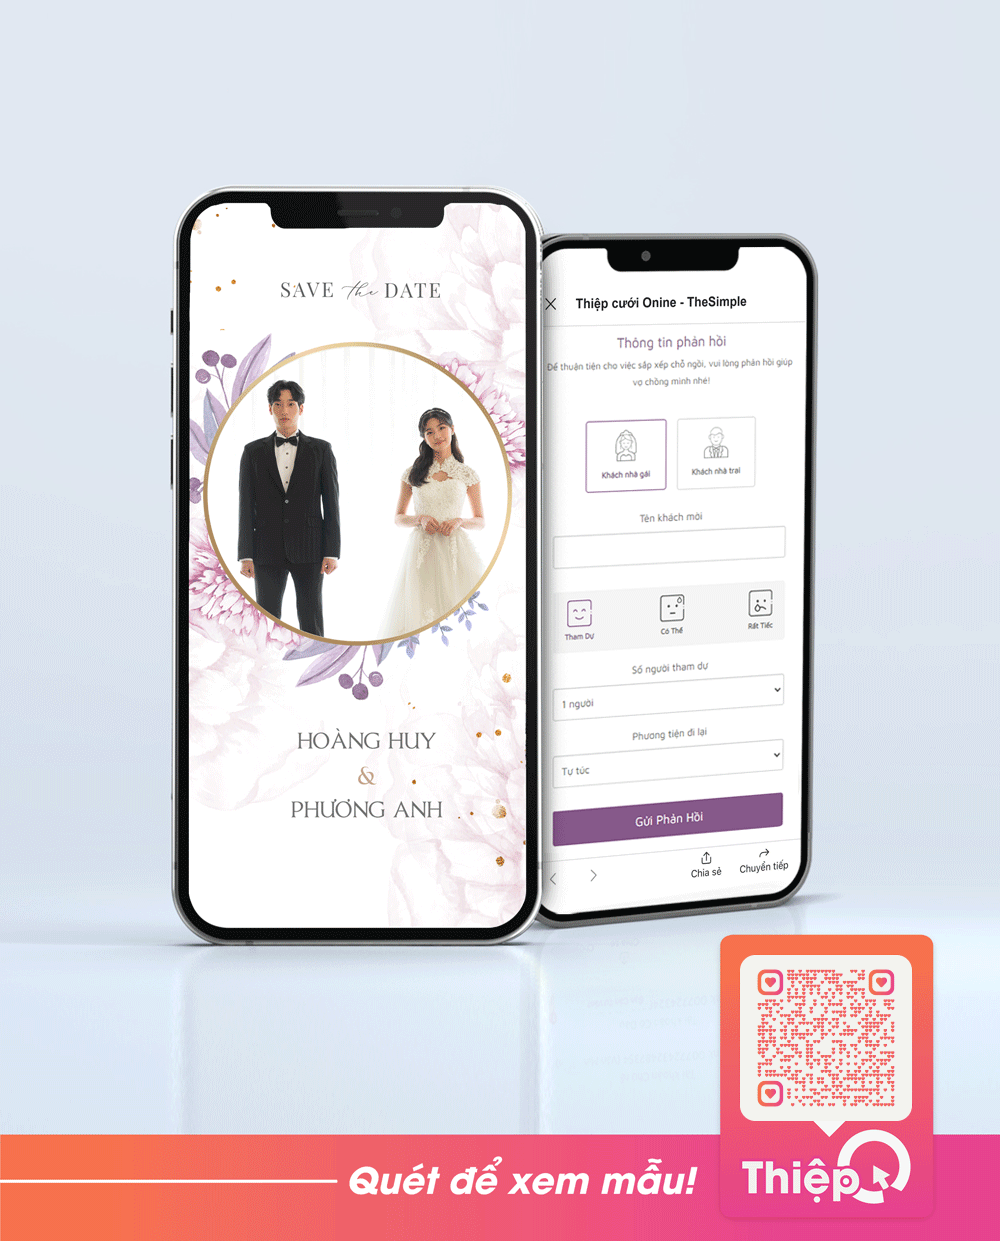 Thiệp cưới Online - The Flower Story - 04 - Mini Wedding Website with RSVP, Digital Wedding Invitation